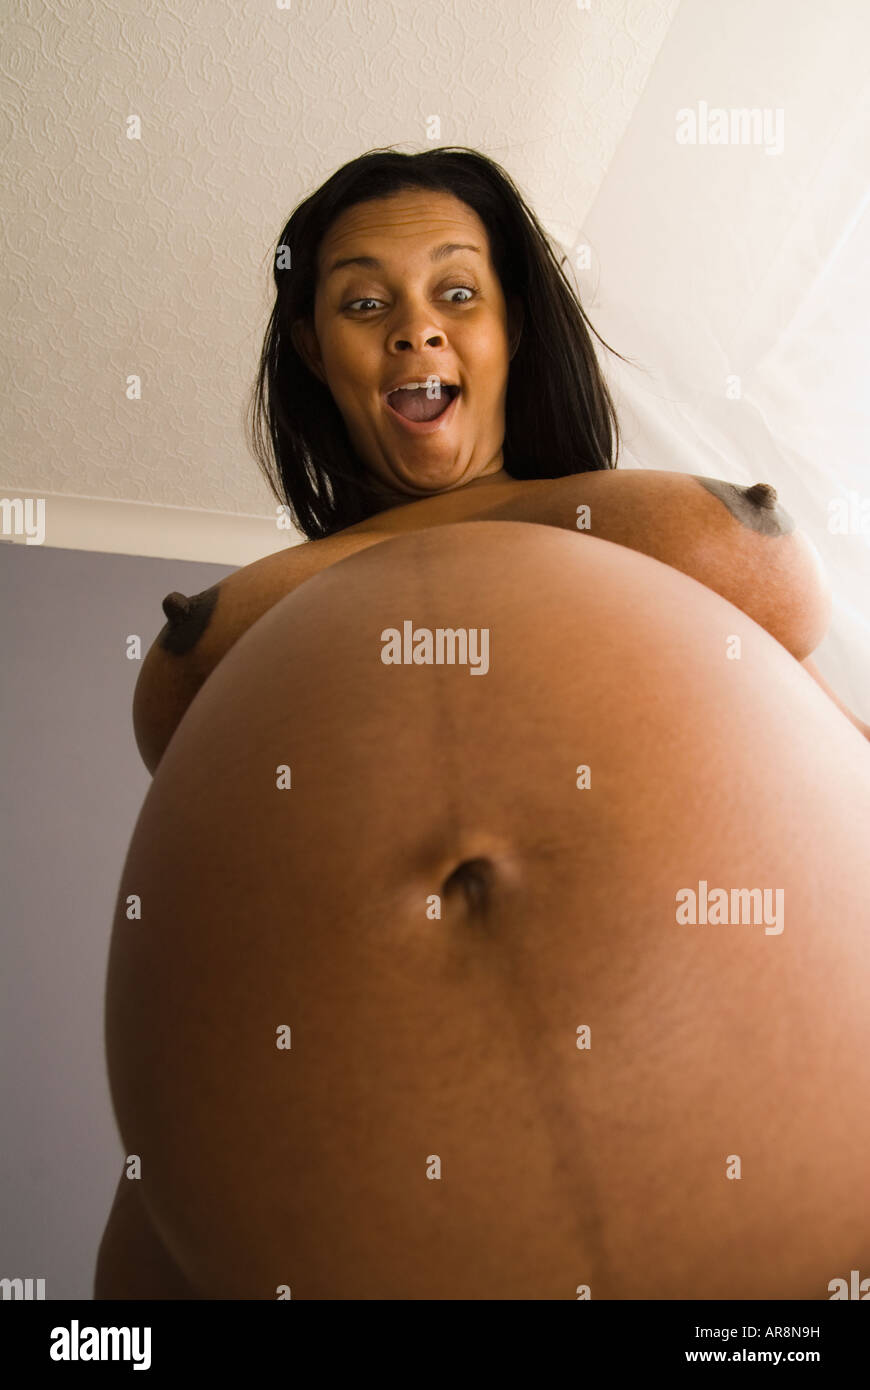 Pregnant naked black woman Stock Photo: Alamy